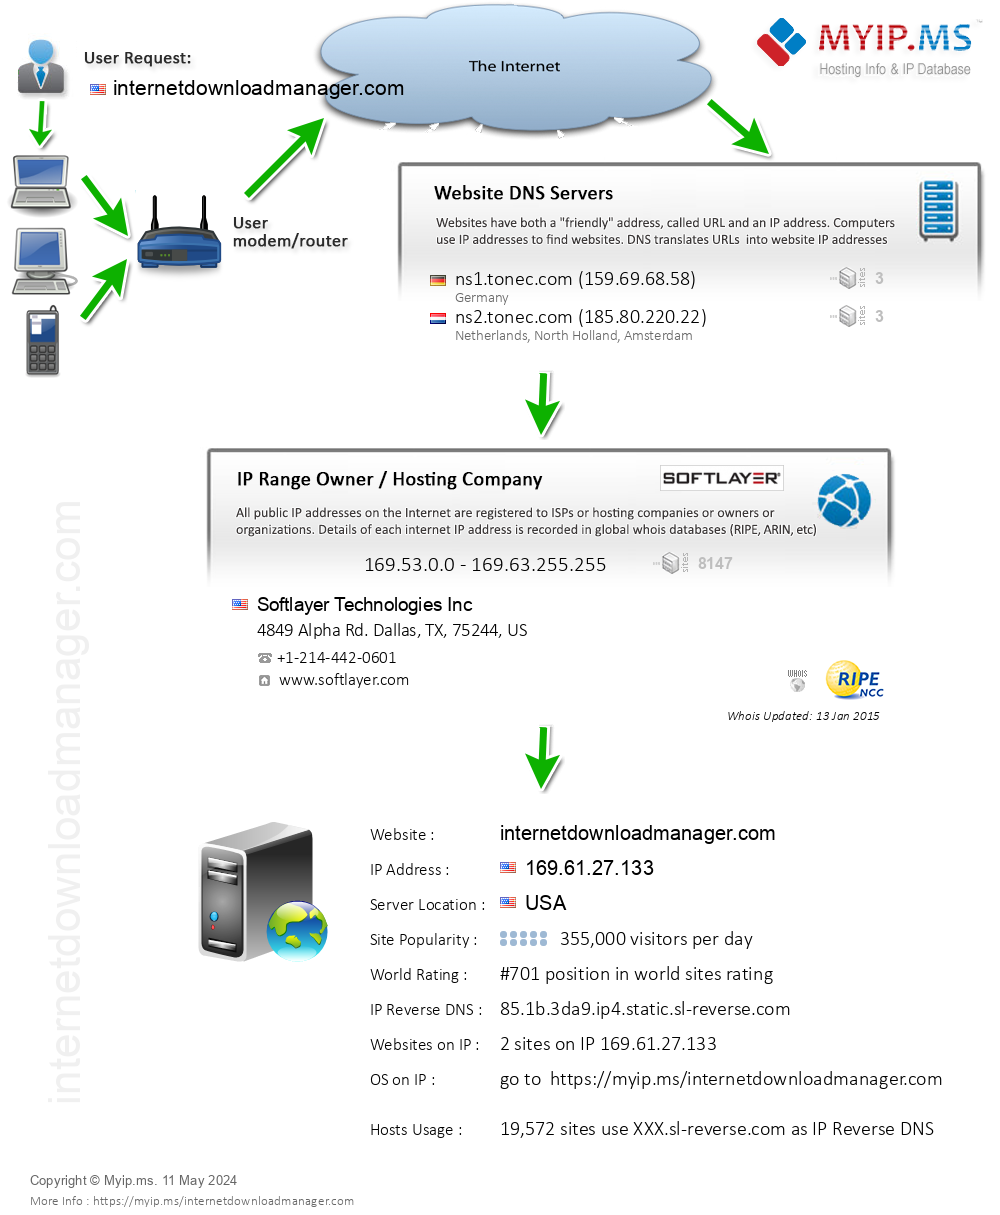 Internetdownloadmanager.com - Website Hosting Visual IP Diagram